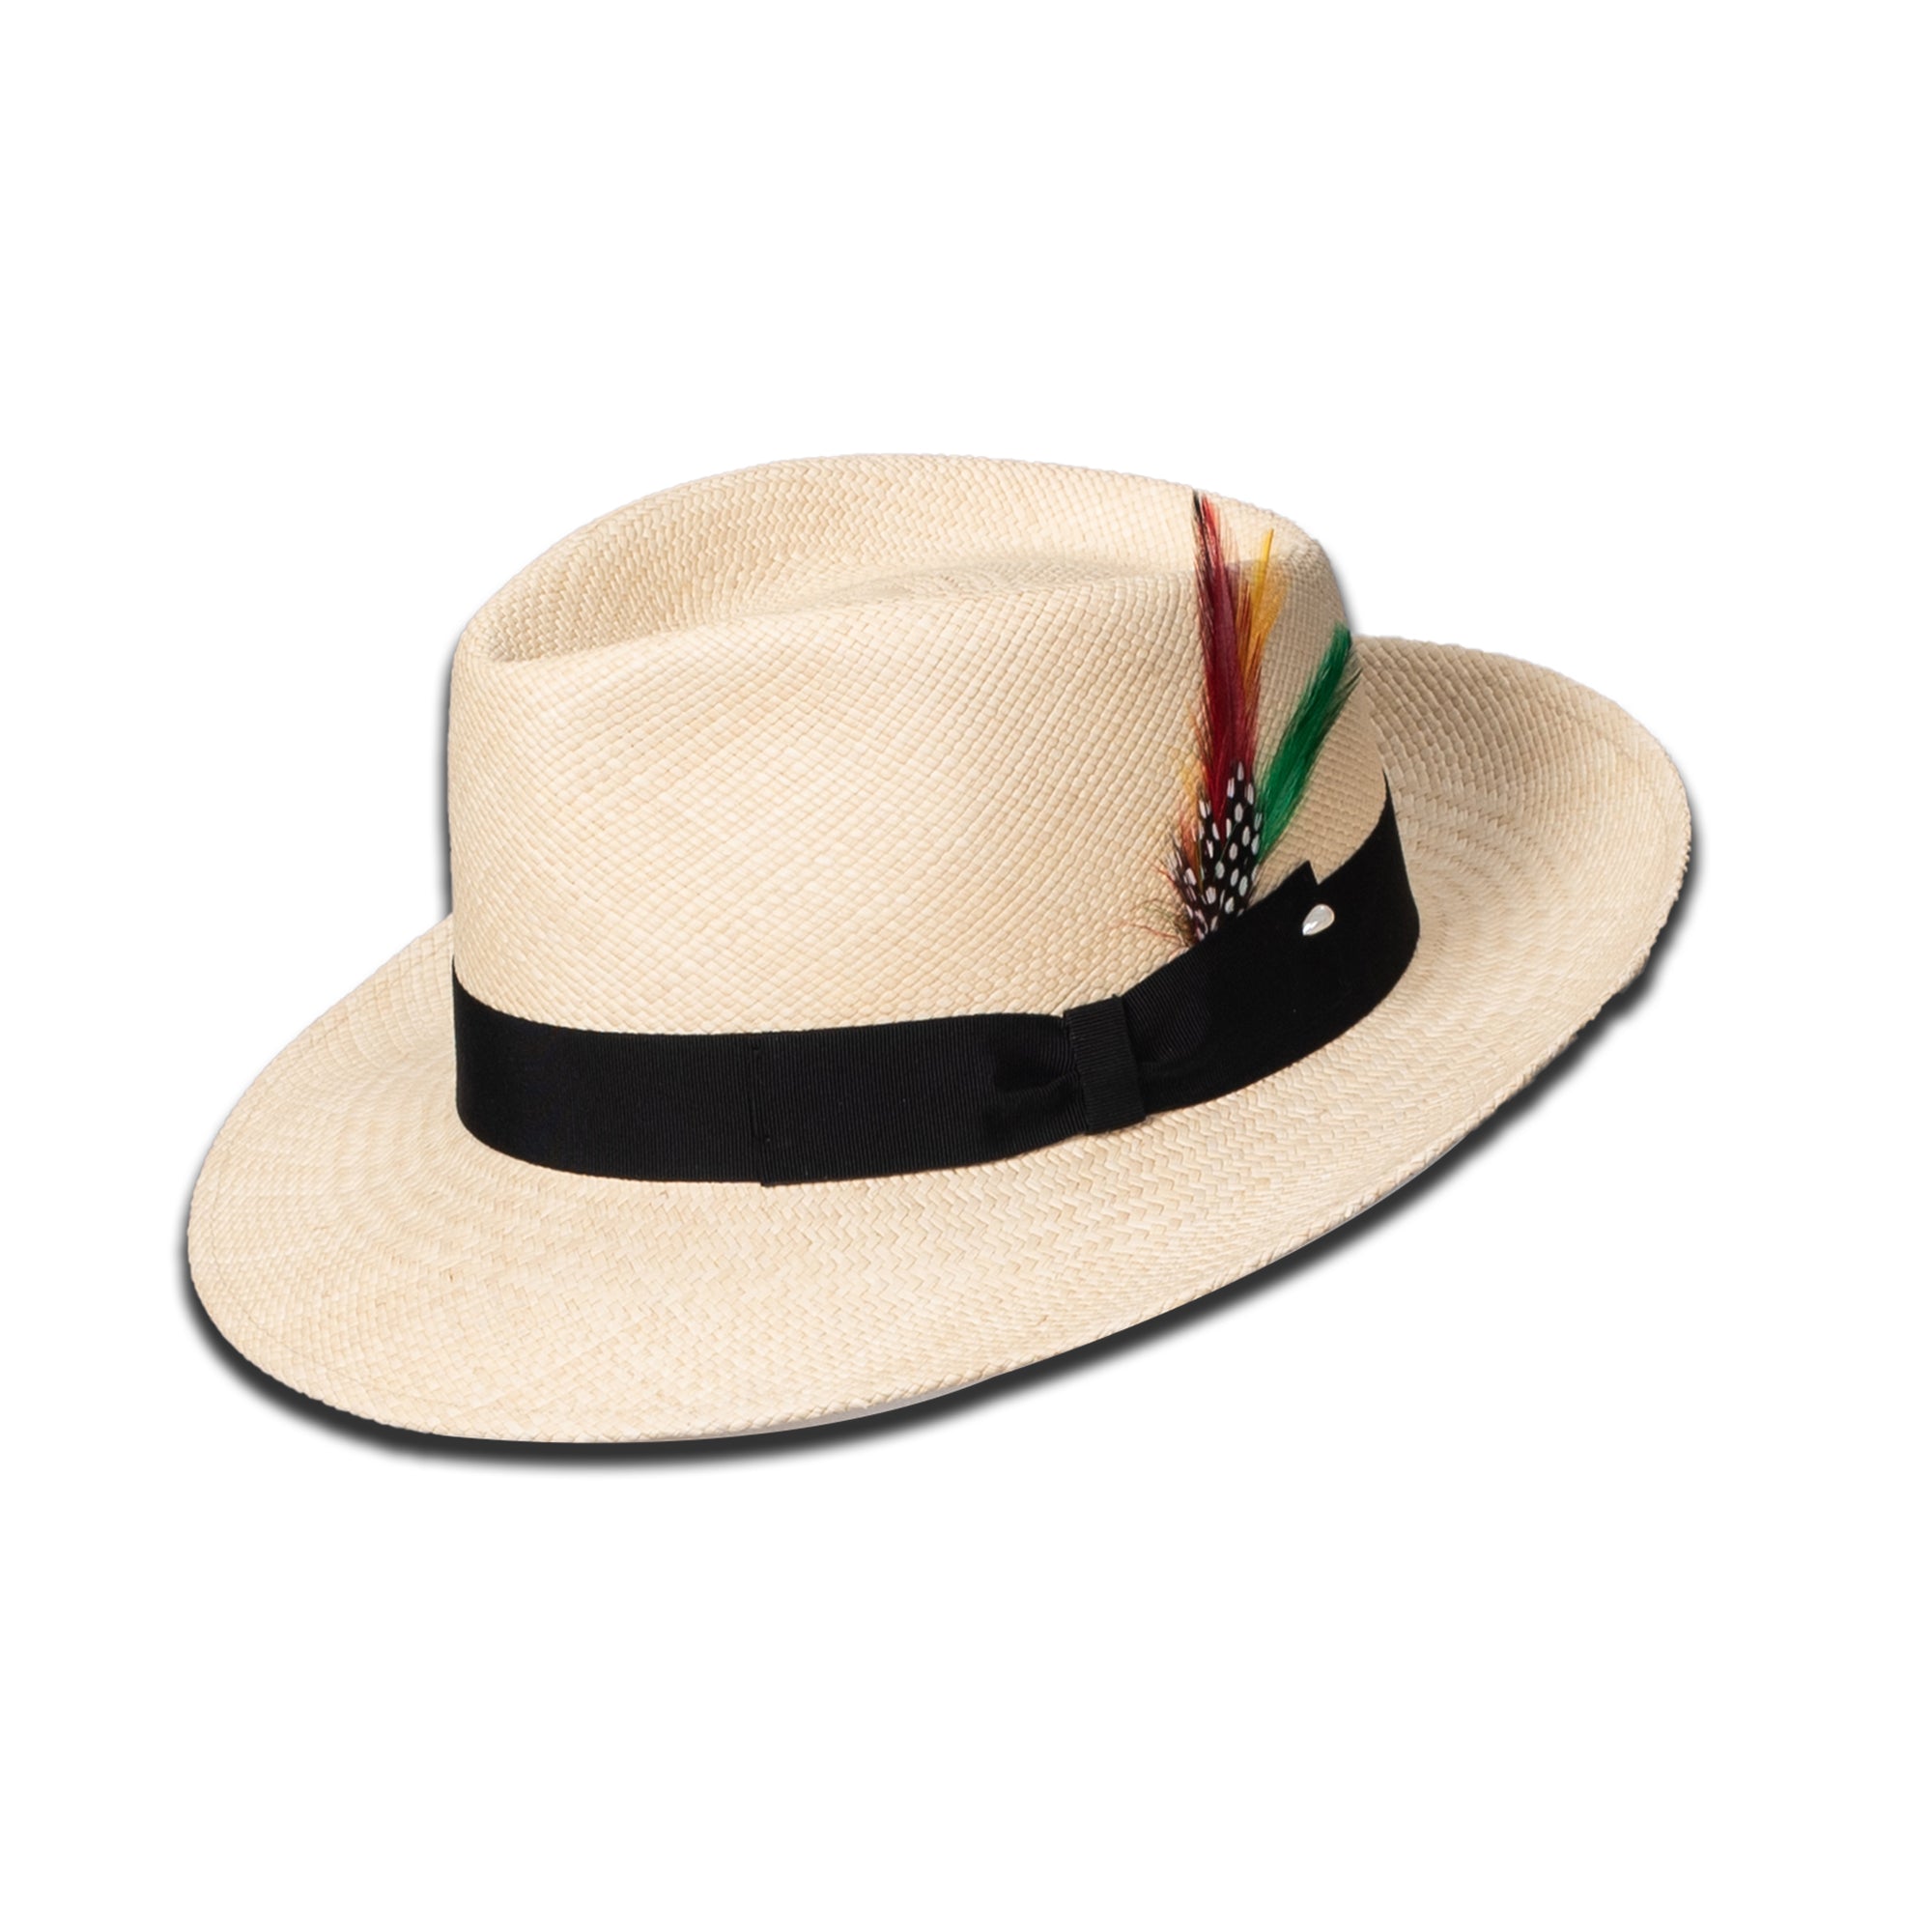 Mario Panama Straw Hat by Capas